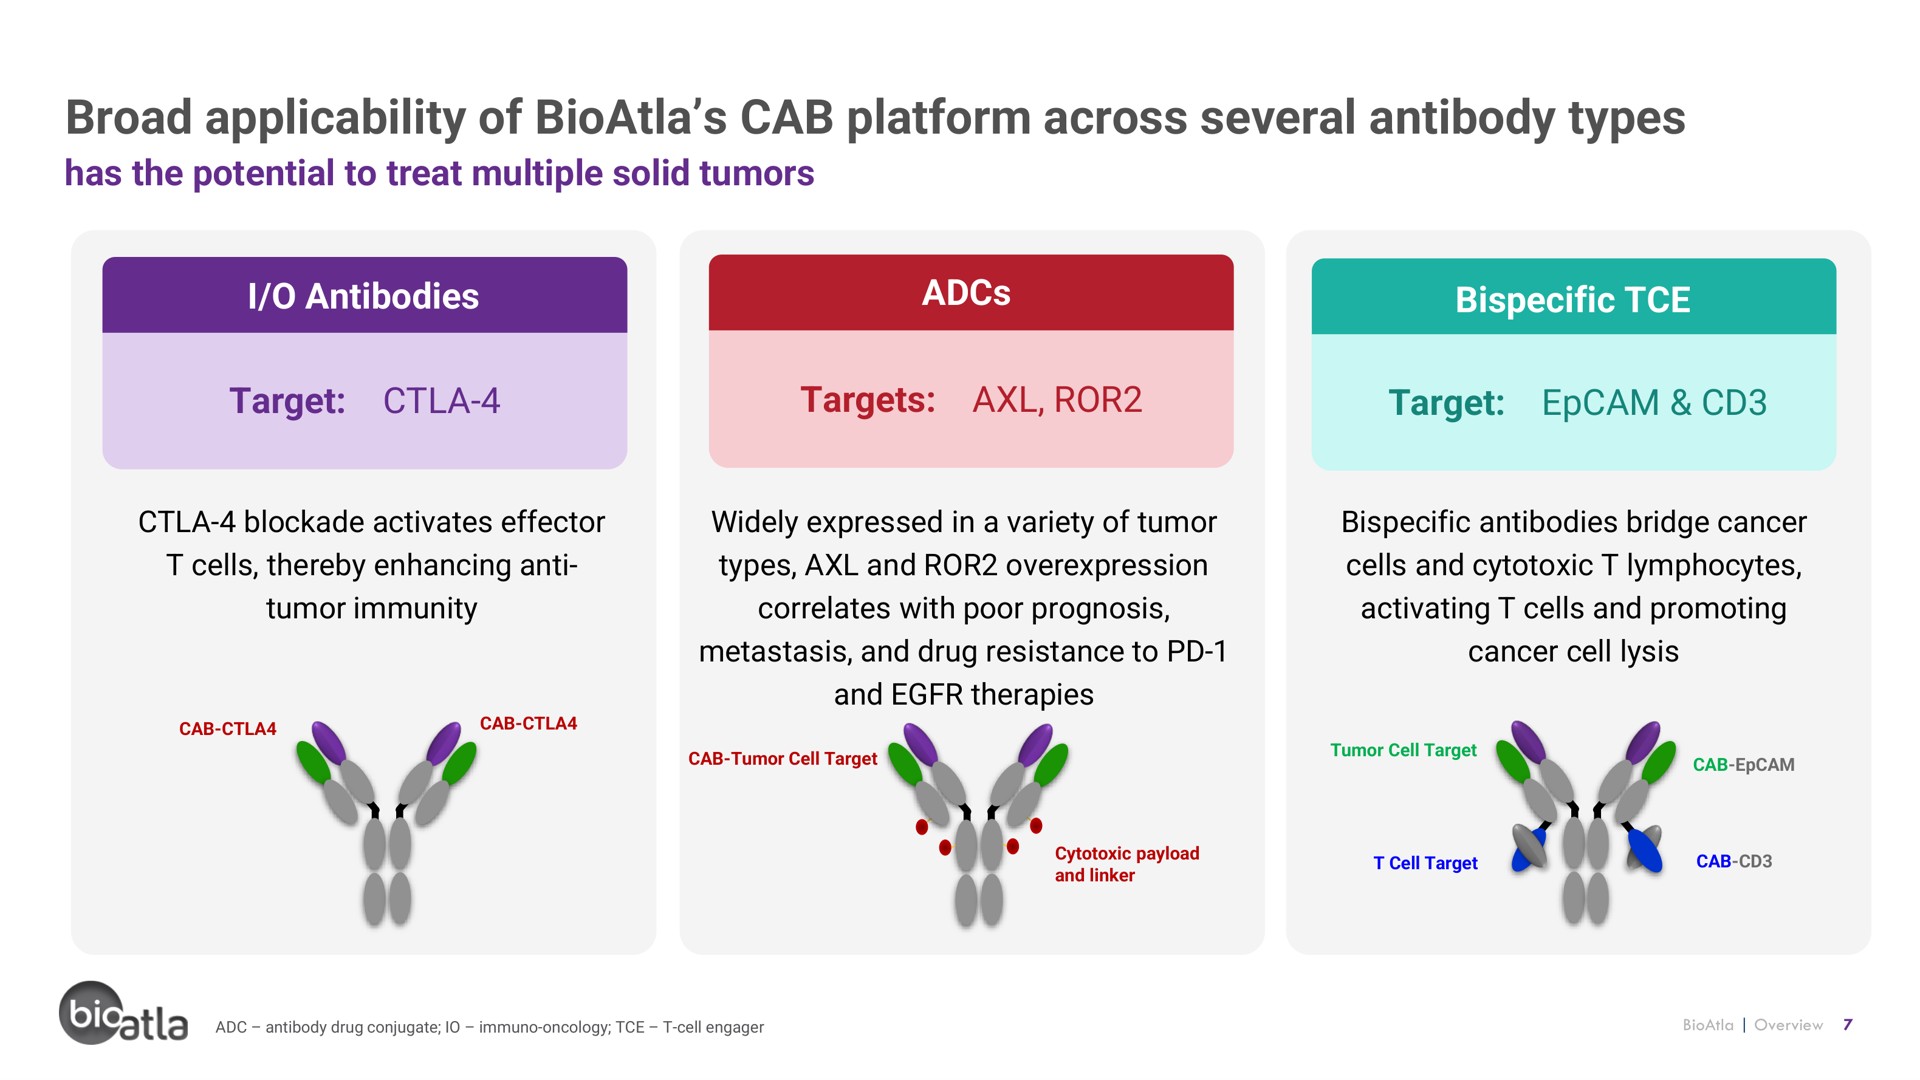 broad applicability of cab platform across several antibody types | BioAtla